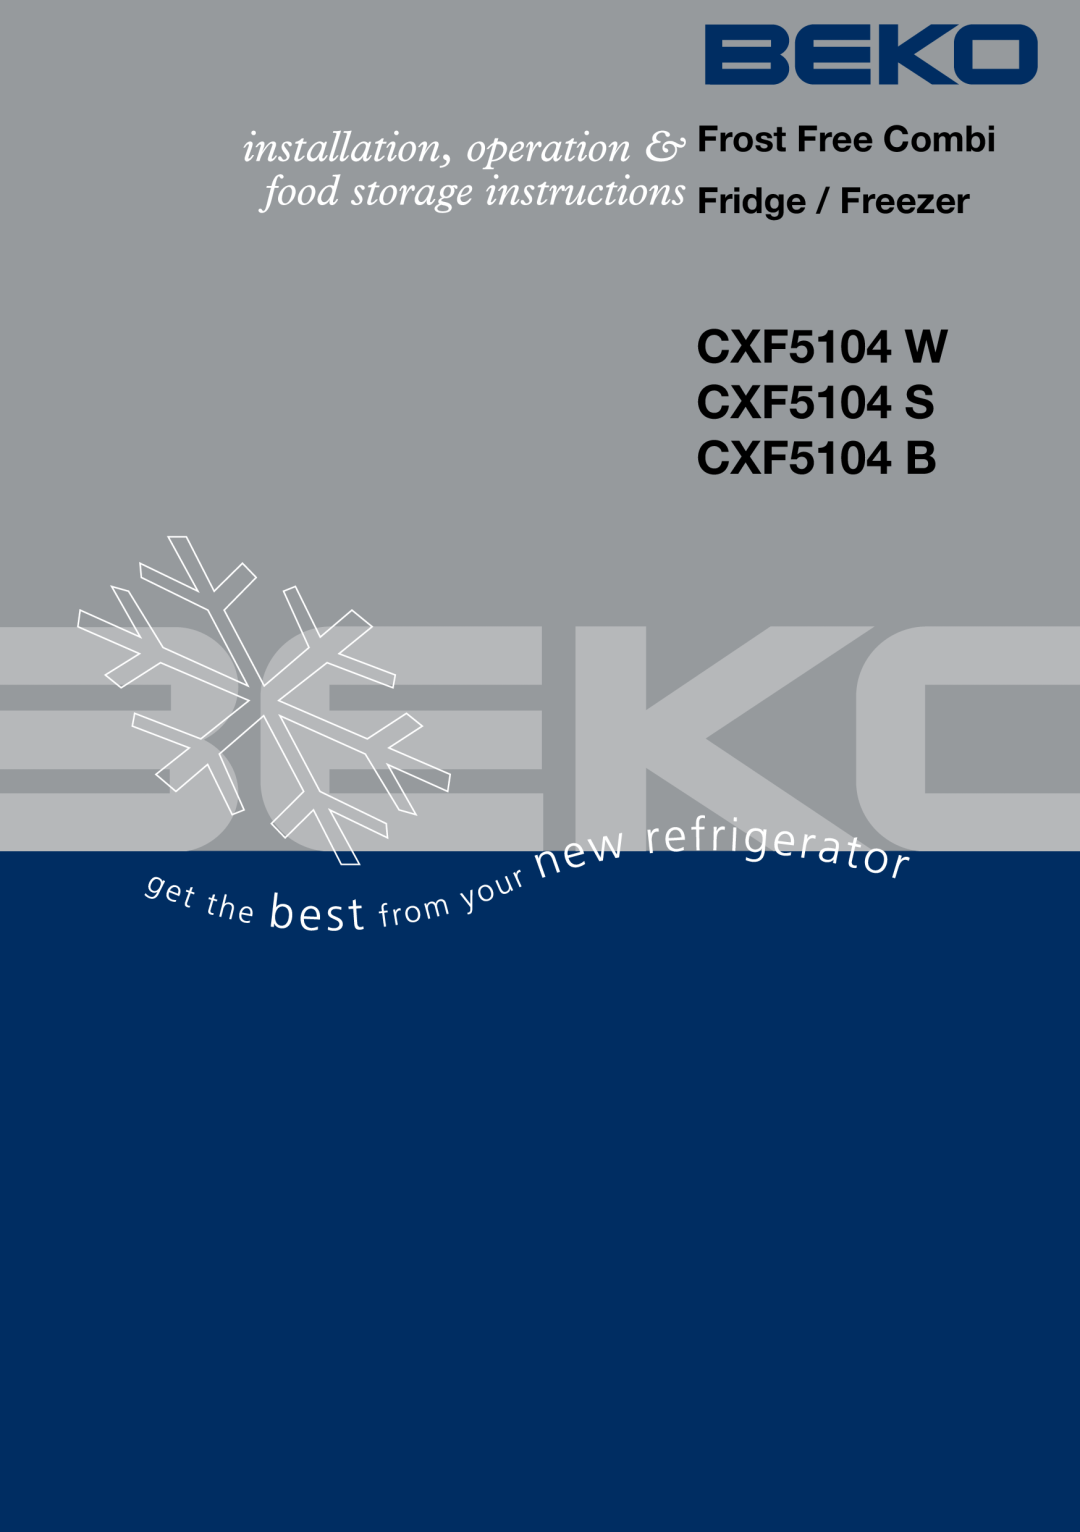 Beko manual Frost Free Combi Fridge / Freezer, CXF5104 W CXF5104 S CXF5104 B 